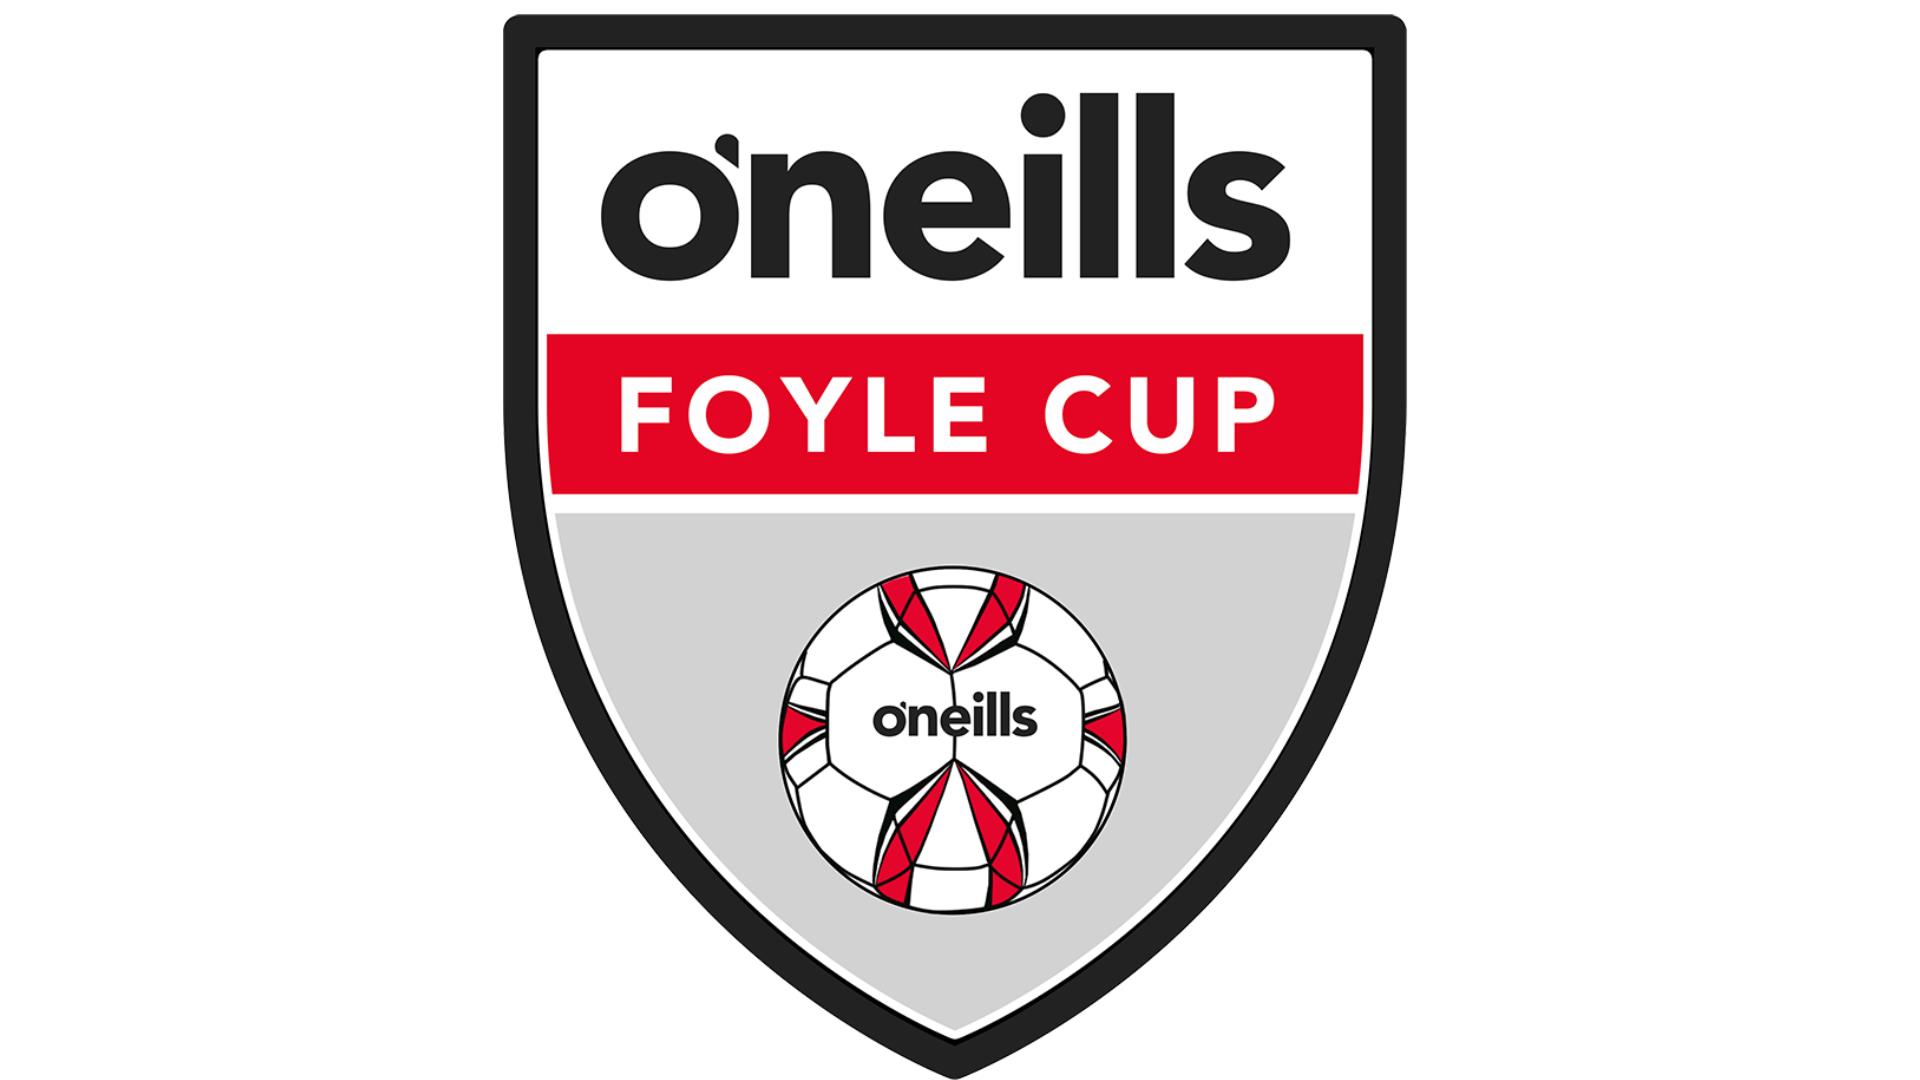 Foyle Cup logo